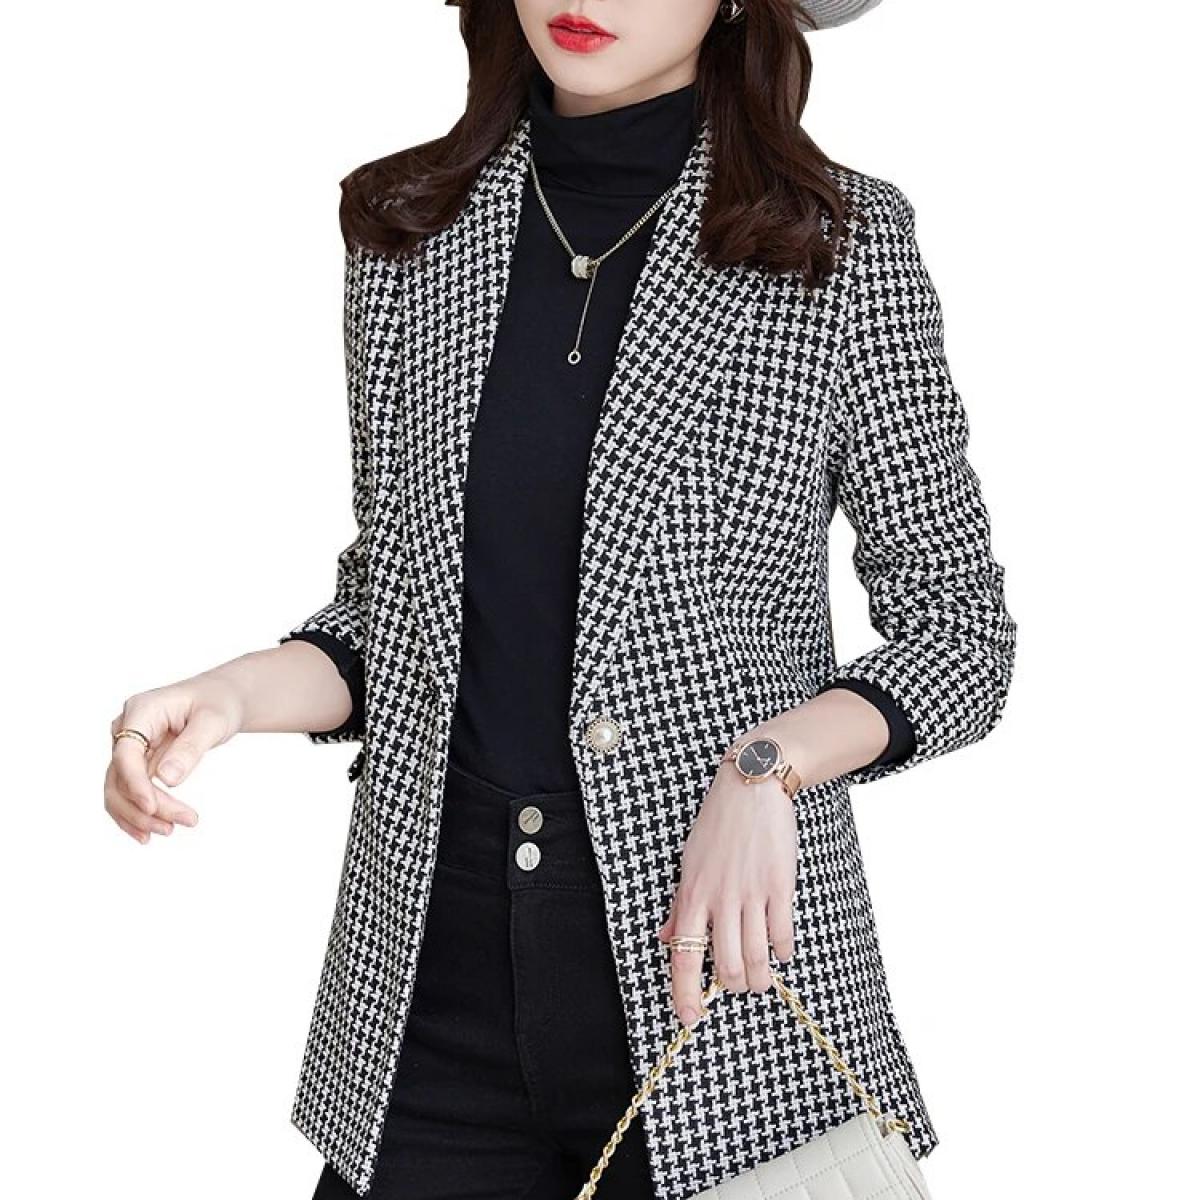 Otoño Invierno señoras Casual Blazer abrigo mujer caqui negro a cuadros manga larga un solo botón chaqueta delgada Blazers